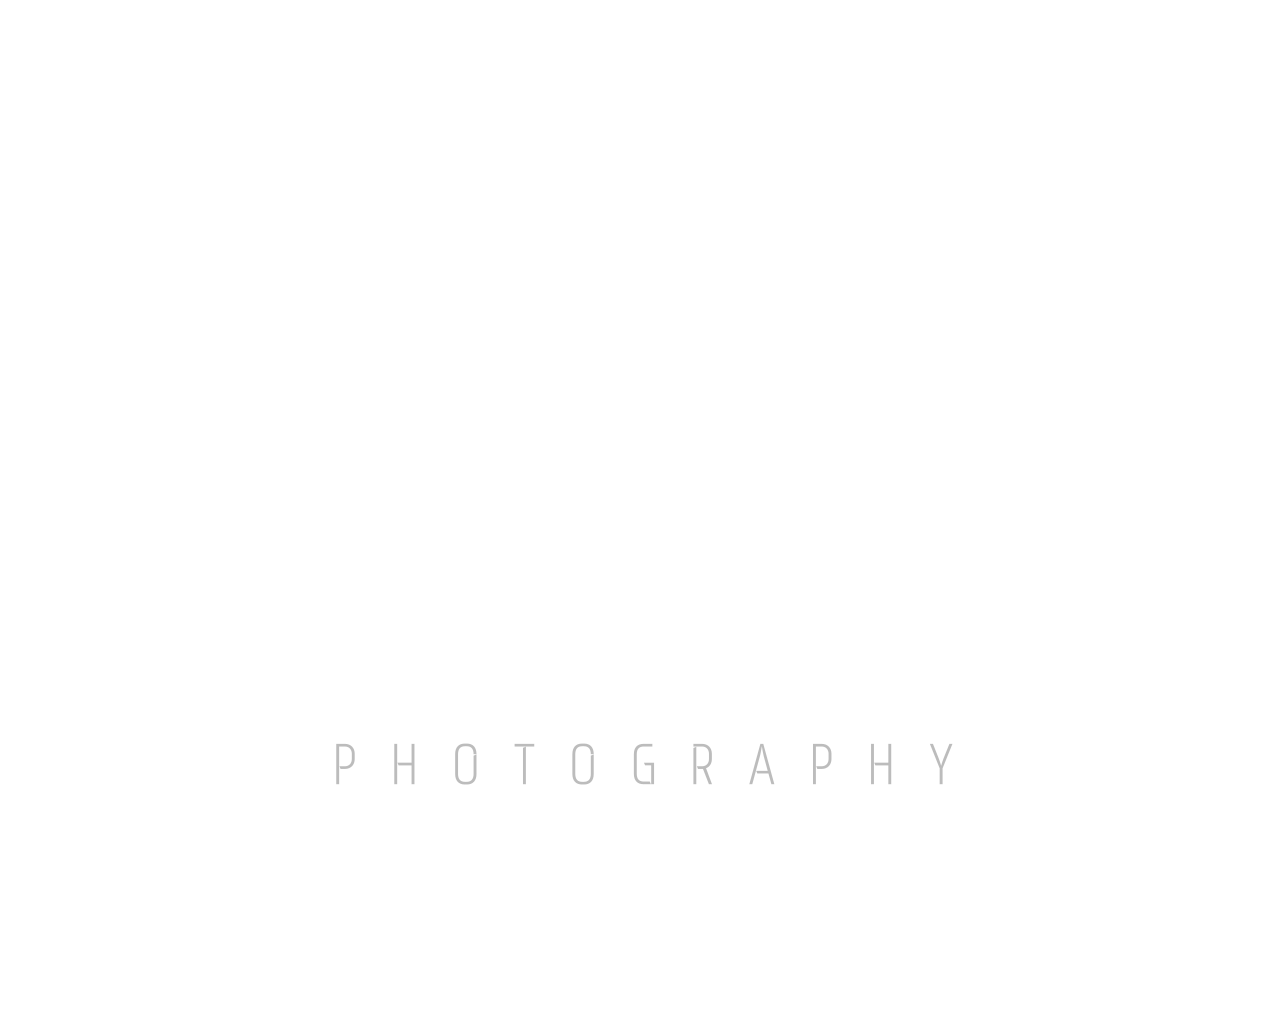 JAMIE FRASER PHOTOGRAPHY